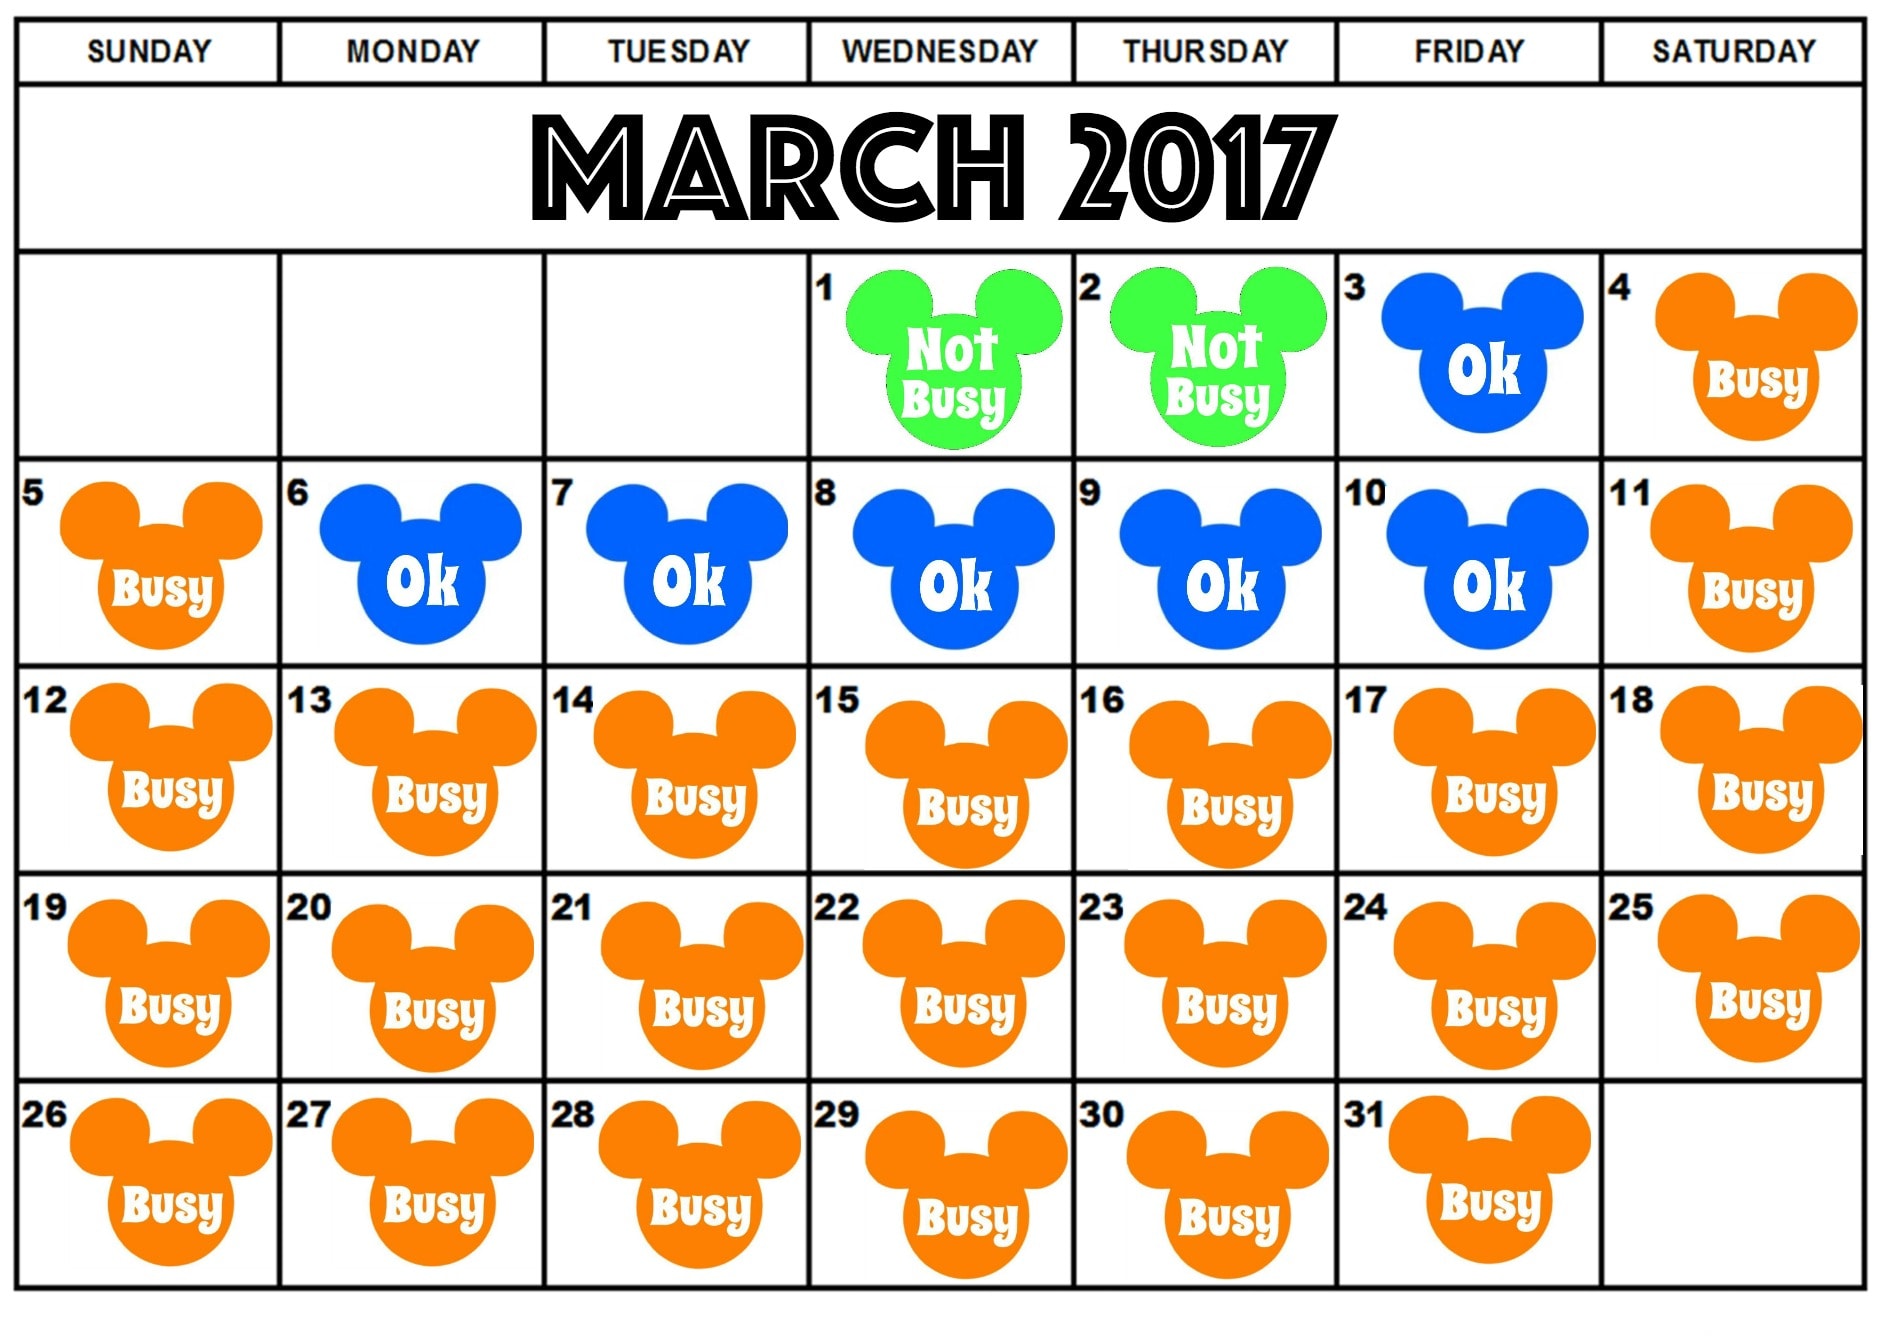 Disneyland March Crowd Calendar